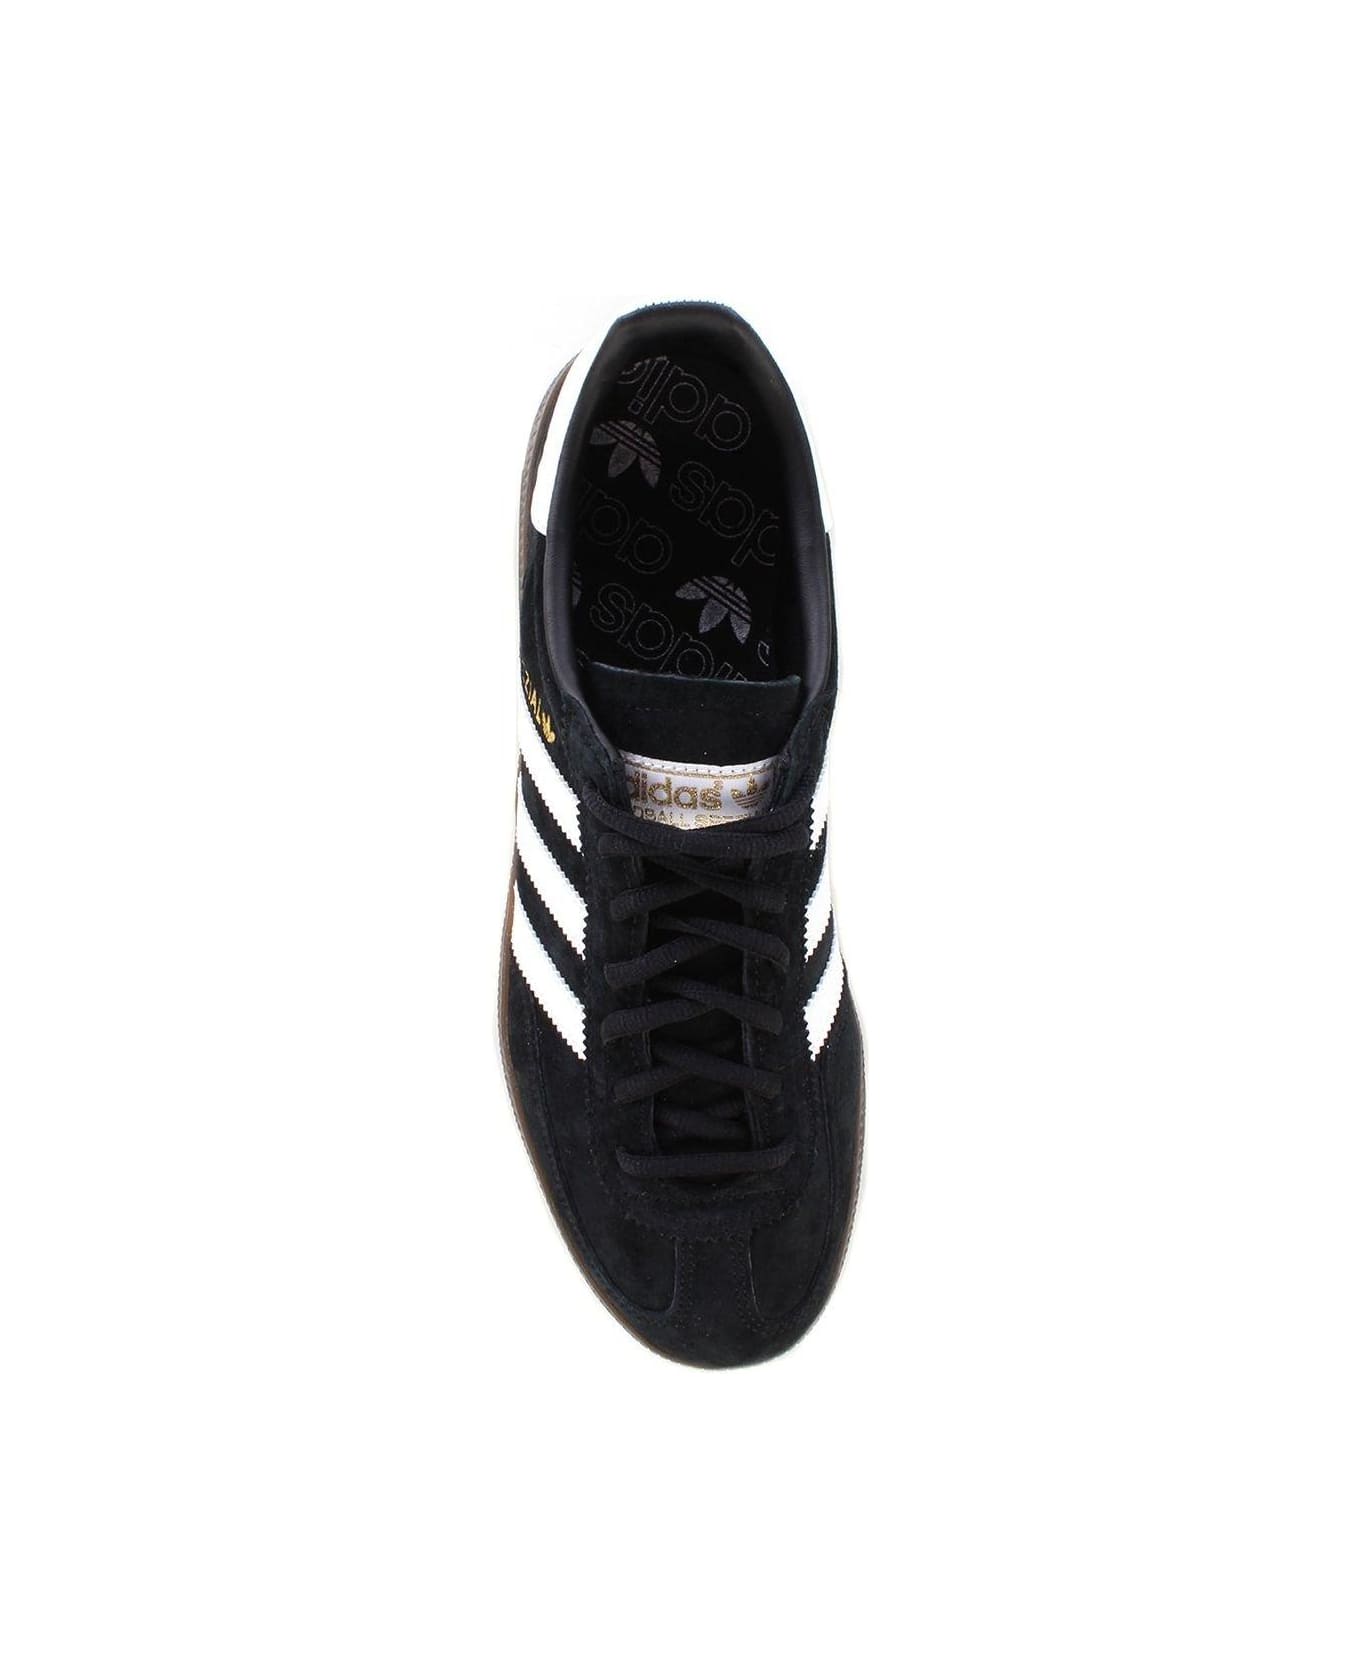 Adidas Originals Handball Spezial Lace-up Sneakers